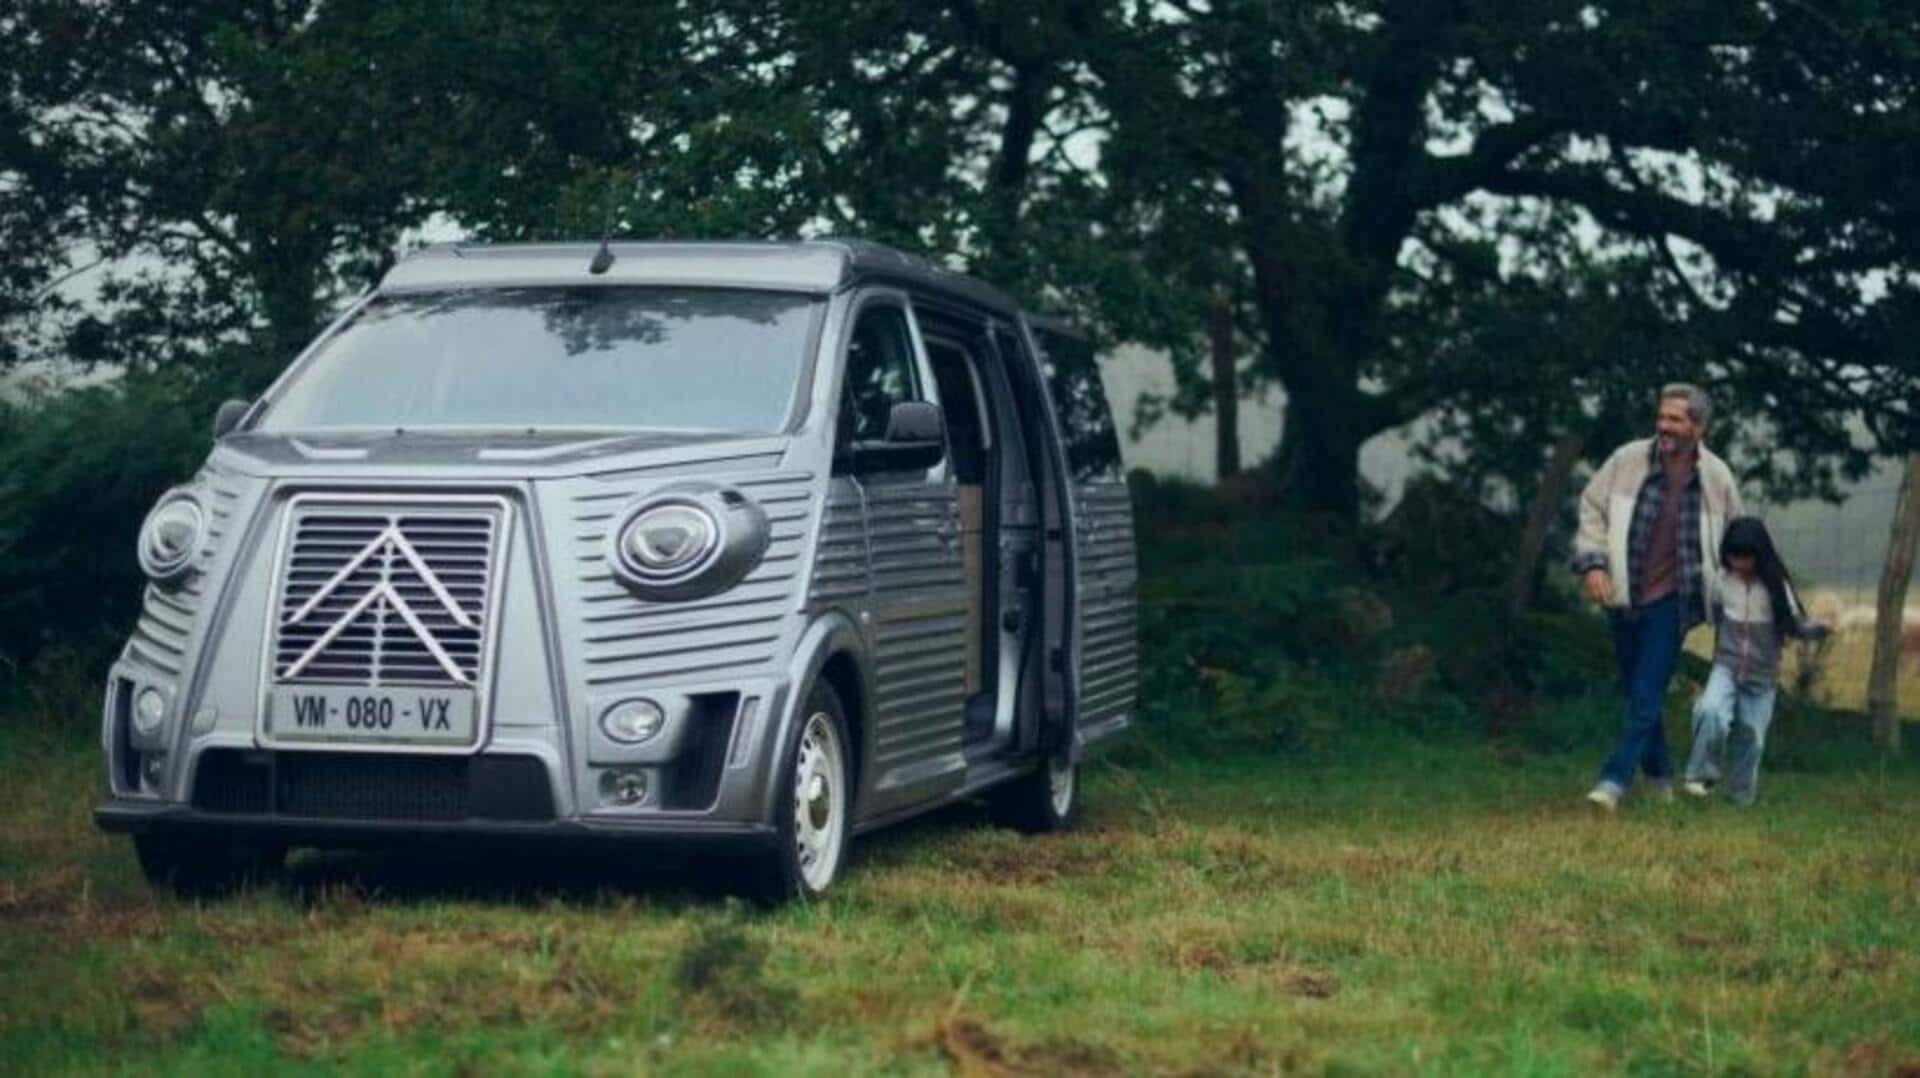 Citroen's Type Holidays concept debuts as a retro-inspired camper van